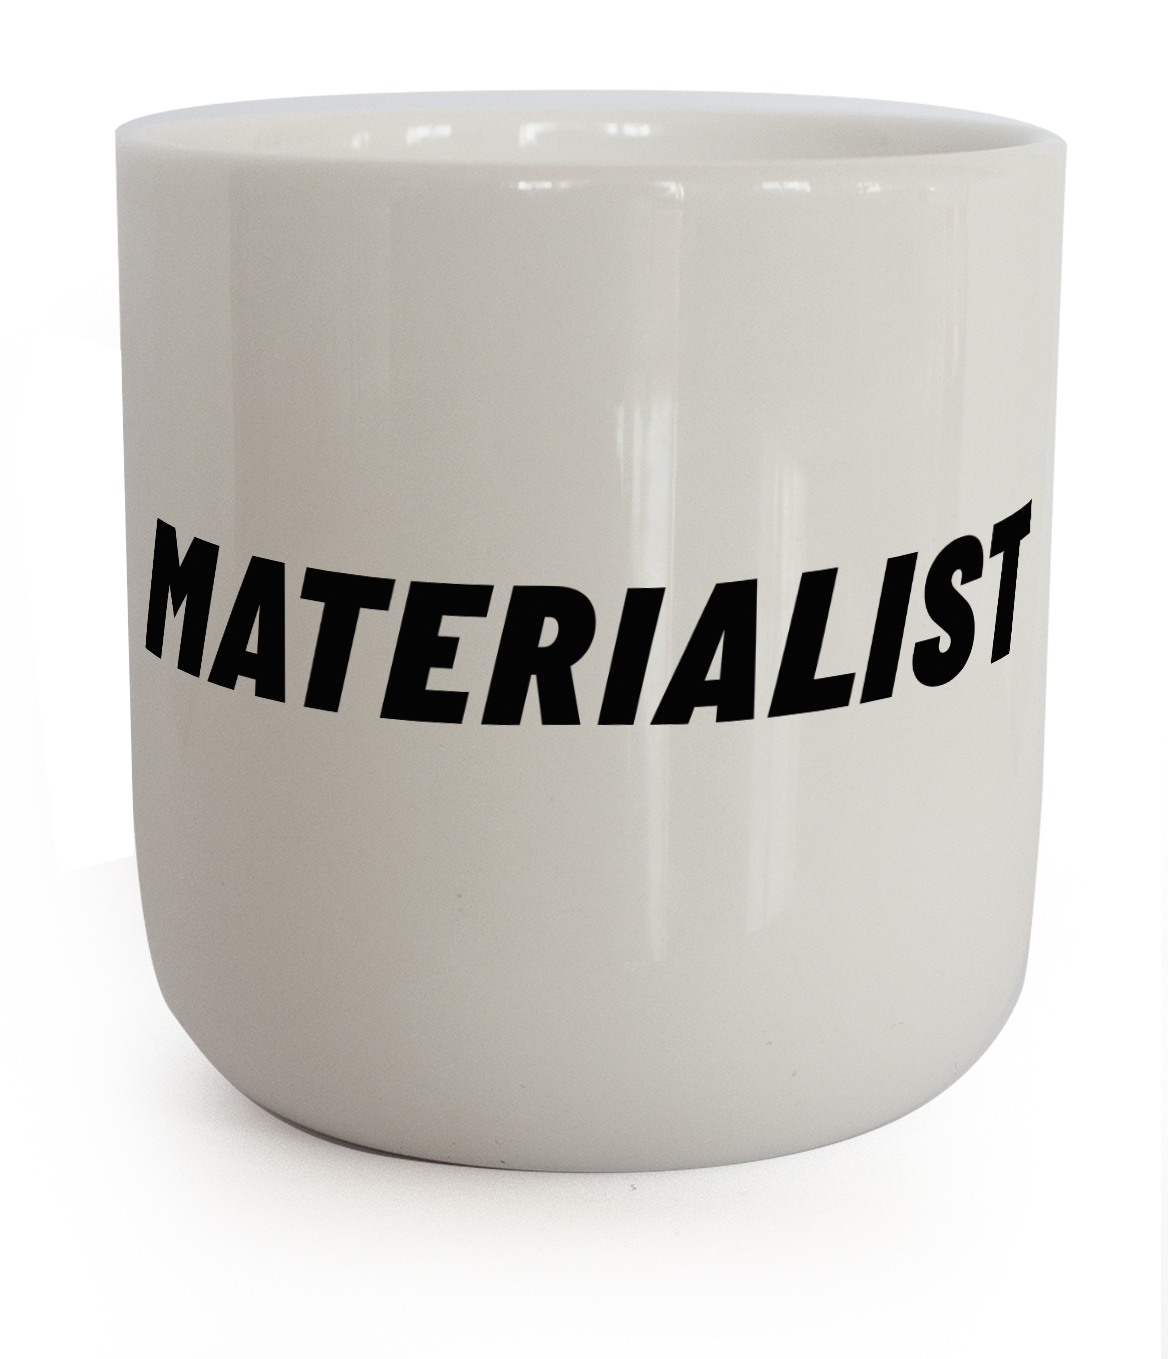 PLTY Materialist Mug